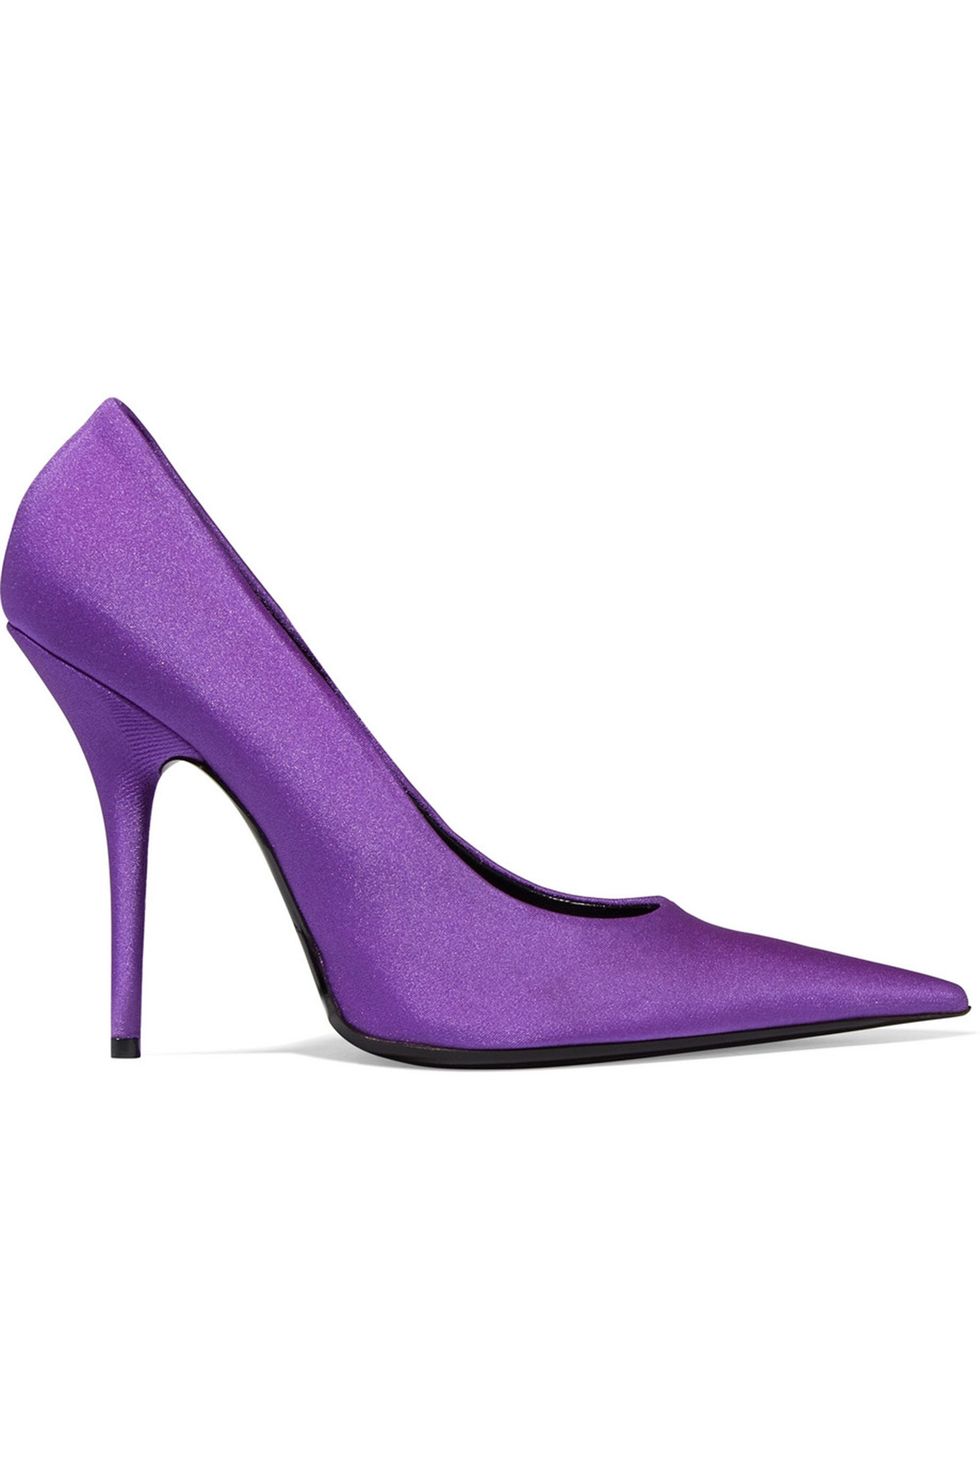 Purple, Violet, Lavender, Basic pump, High heels, Court shoe, Dress shoe, Foot, Sandal, Dancing shoe, 